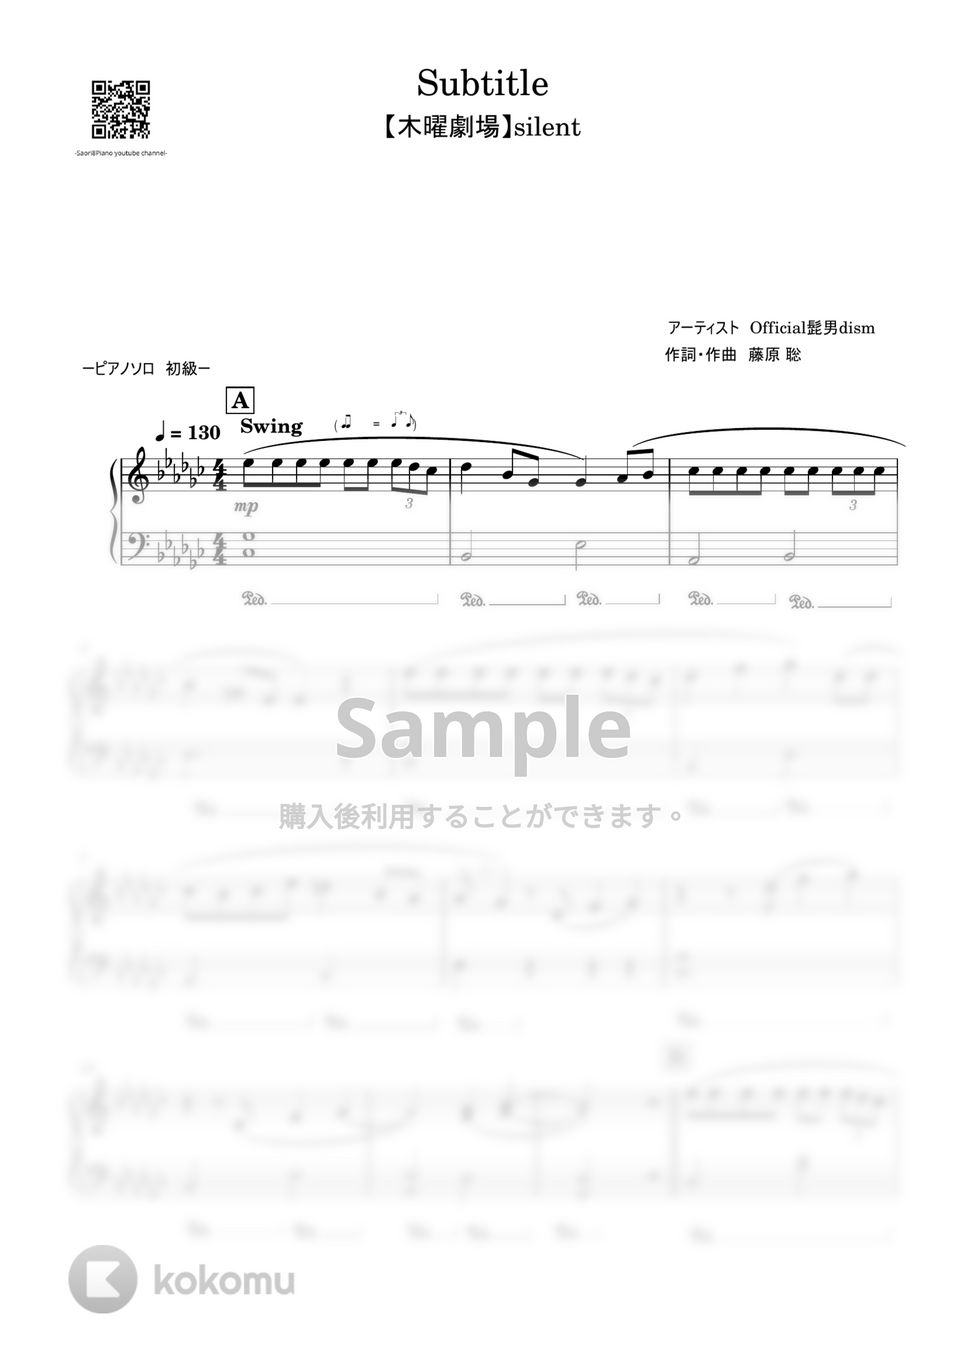 Official髭男dism - Subtitle (【ドラマ】Silent/初級レベル) by Saori8Piano